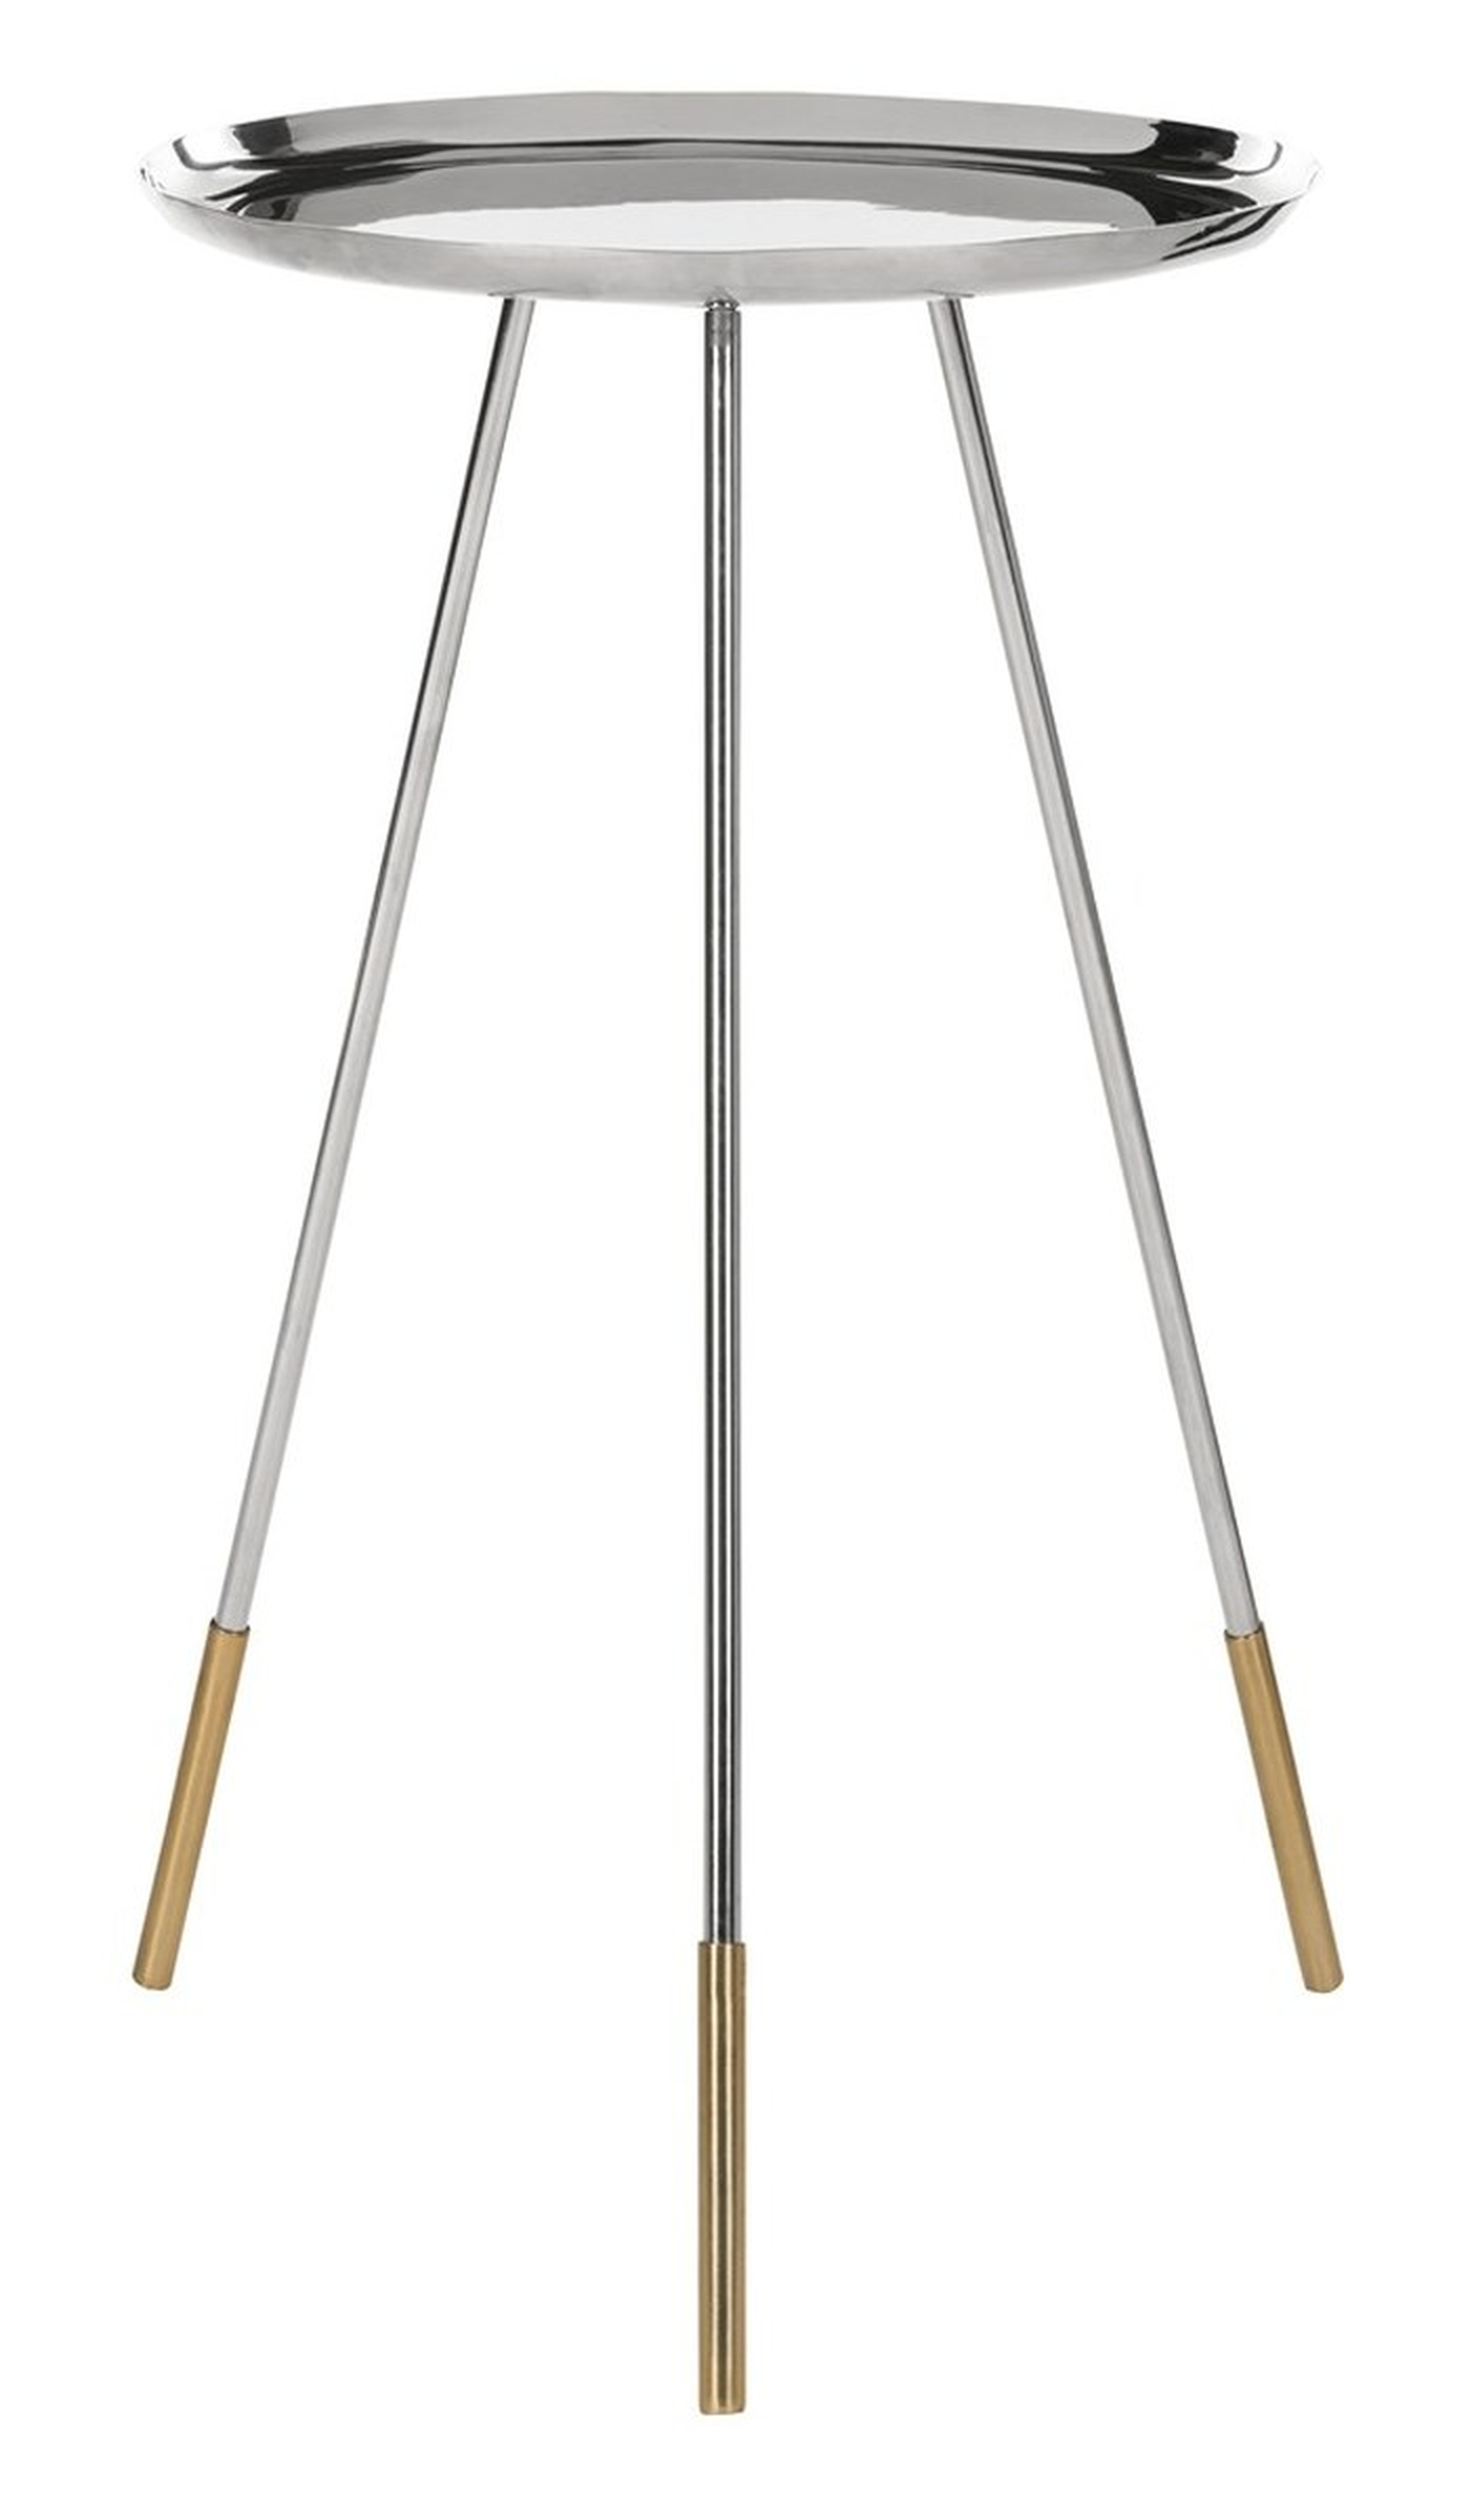 Calix Tri Leg Contemporary Glam Side Table - Gold/Nickel - Arlo Home - Arlo Home